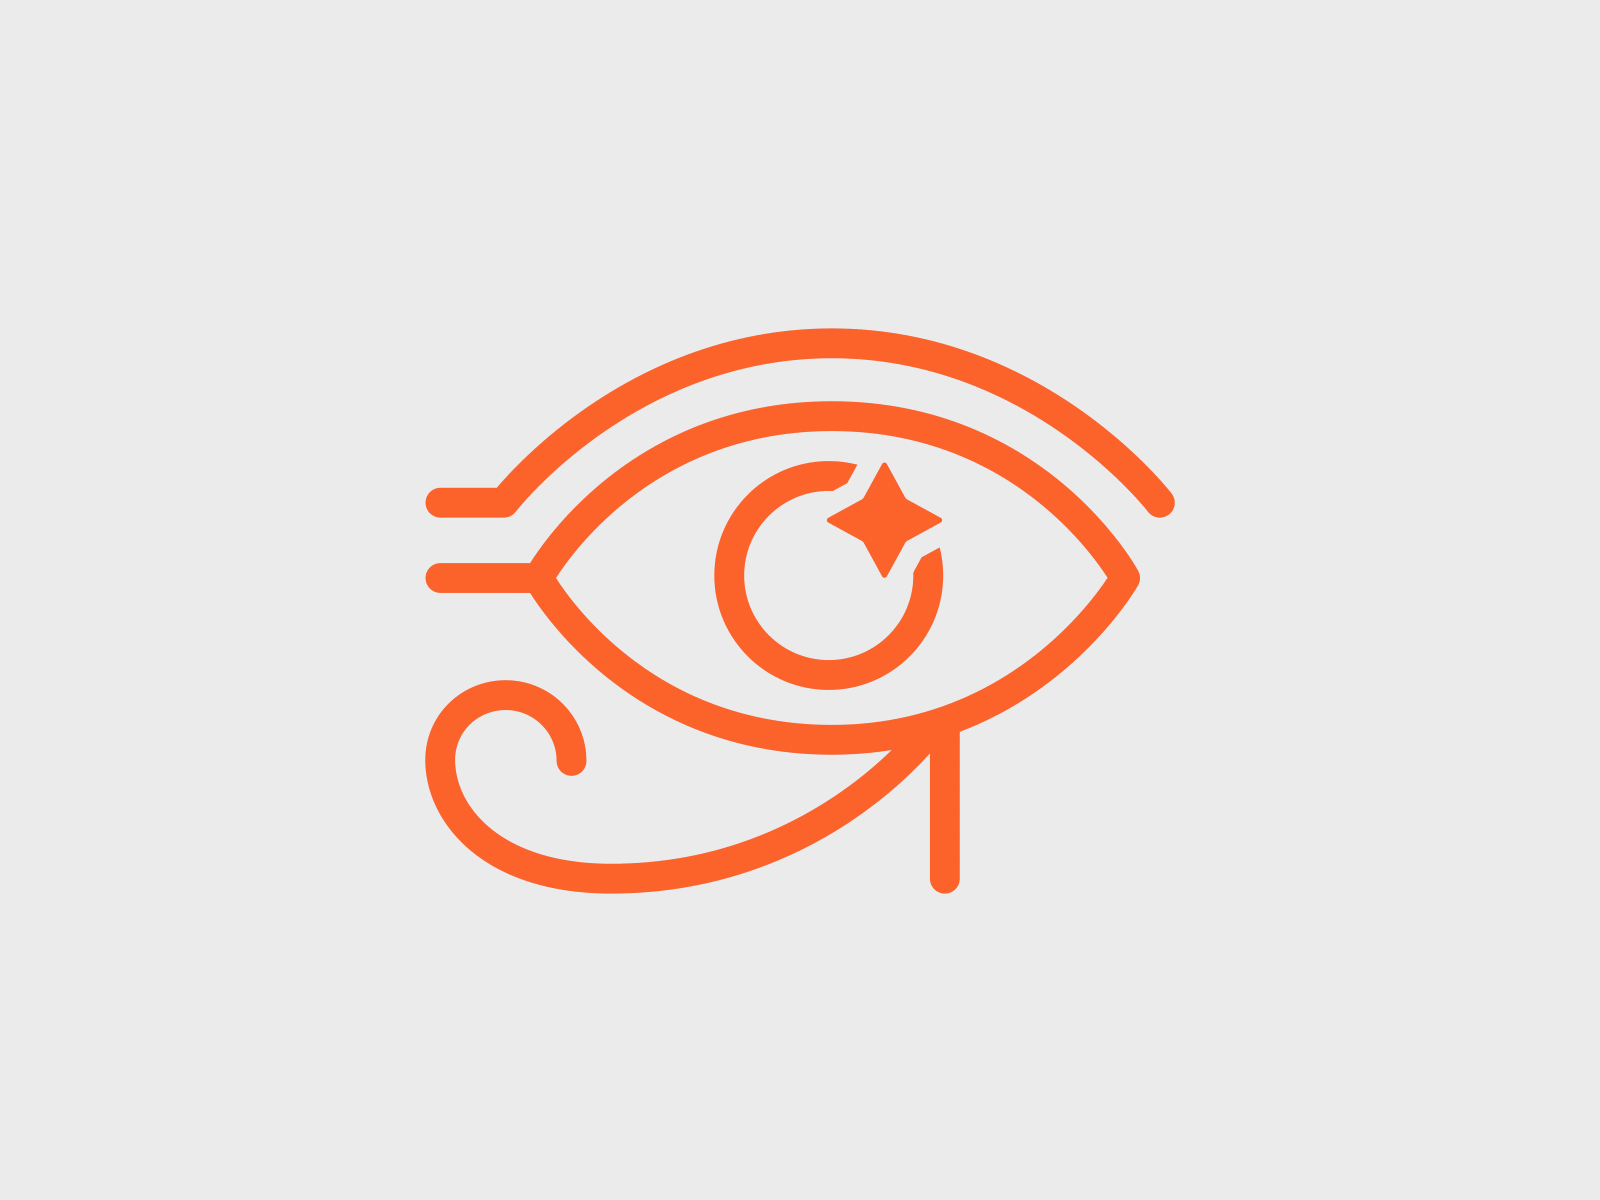 Eye Blink Logo Animation by Dmitry Soloviev on Dribbble